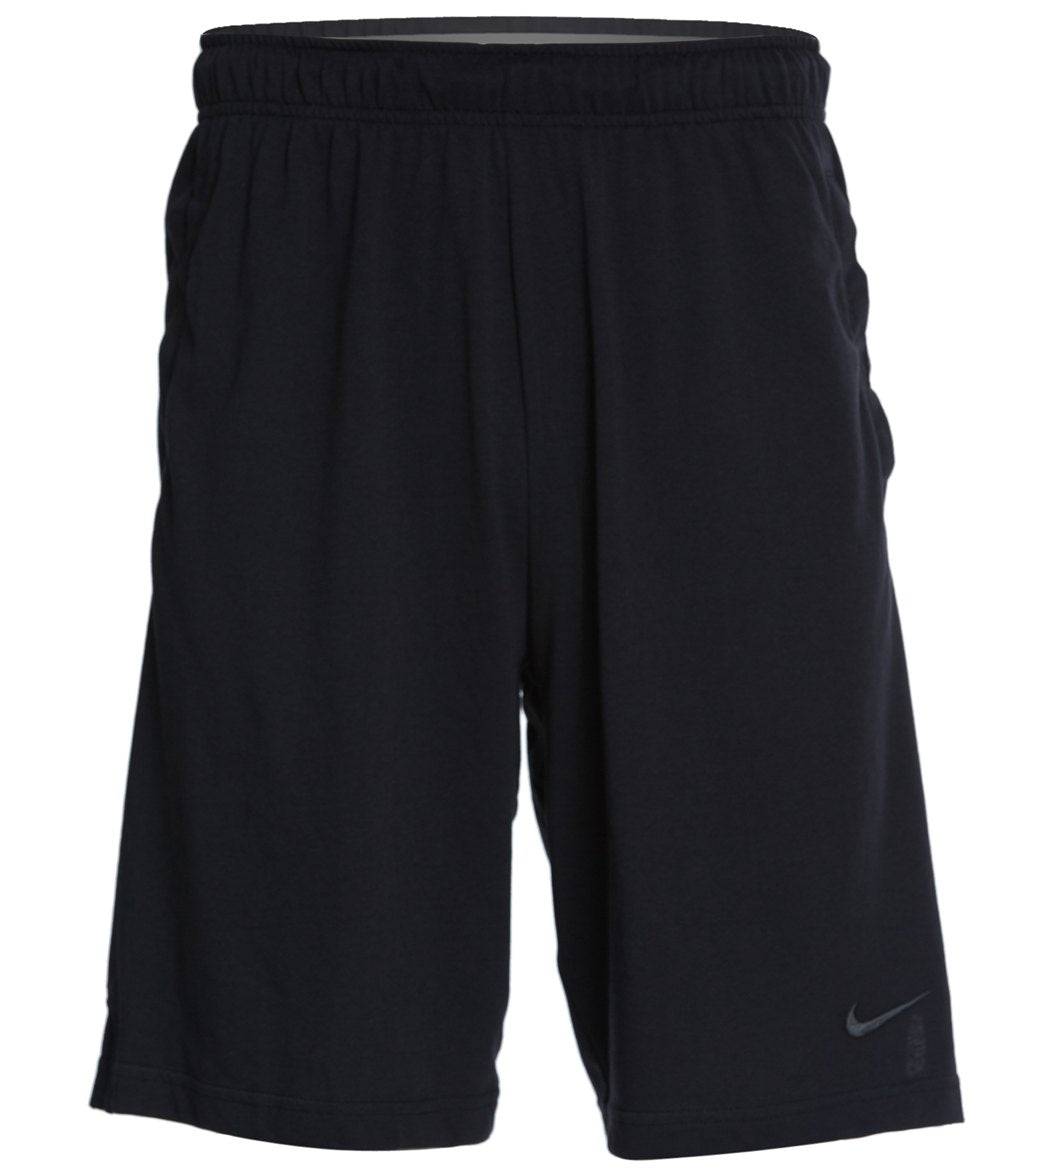 Nike Men's Training Short - Black Xxl Cotton/Polyester - Swimoutlet.com